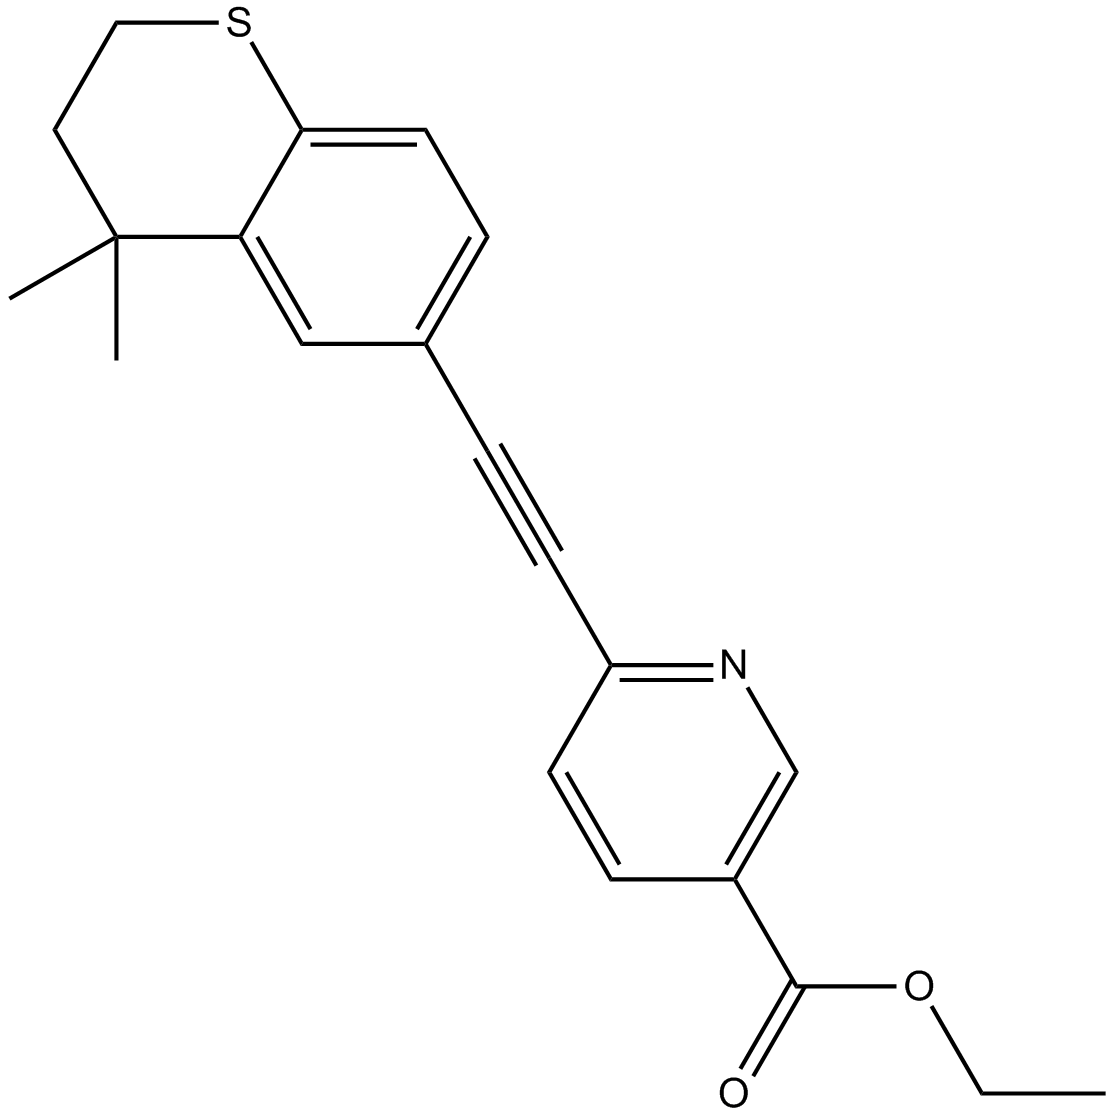 Tazarotene  Chemical Structure